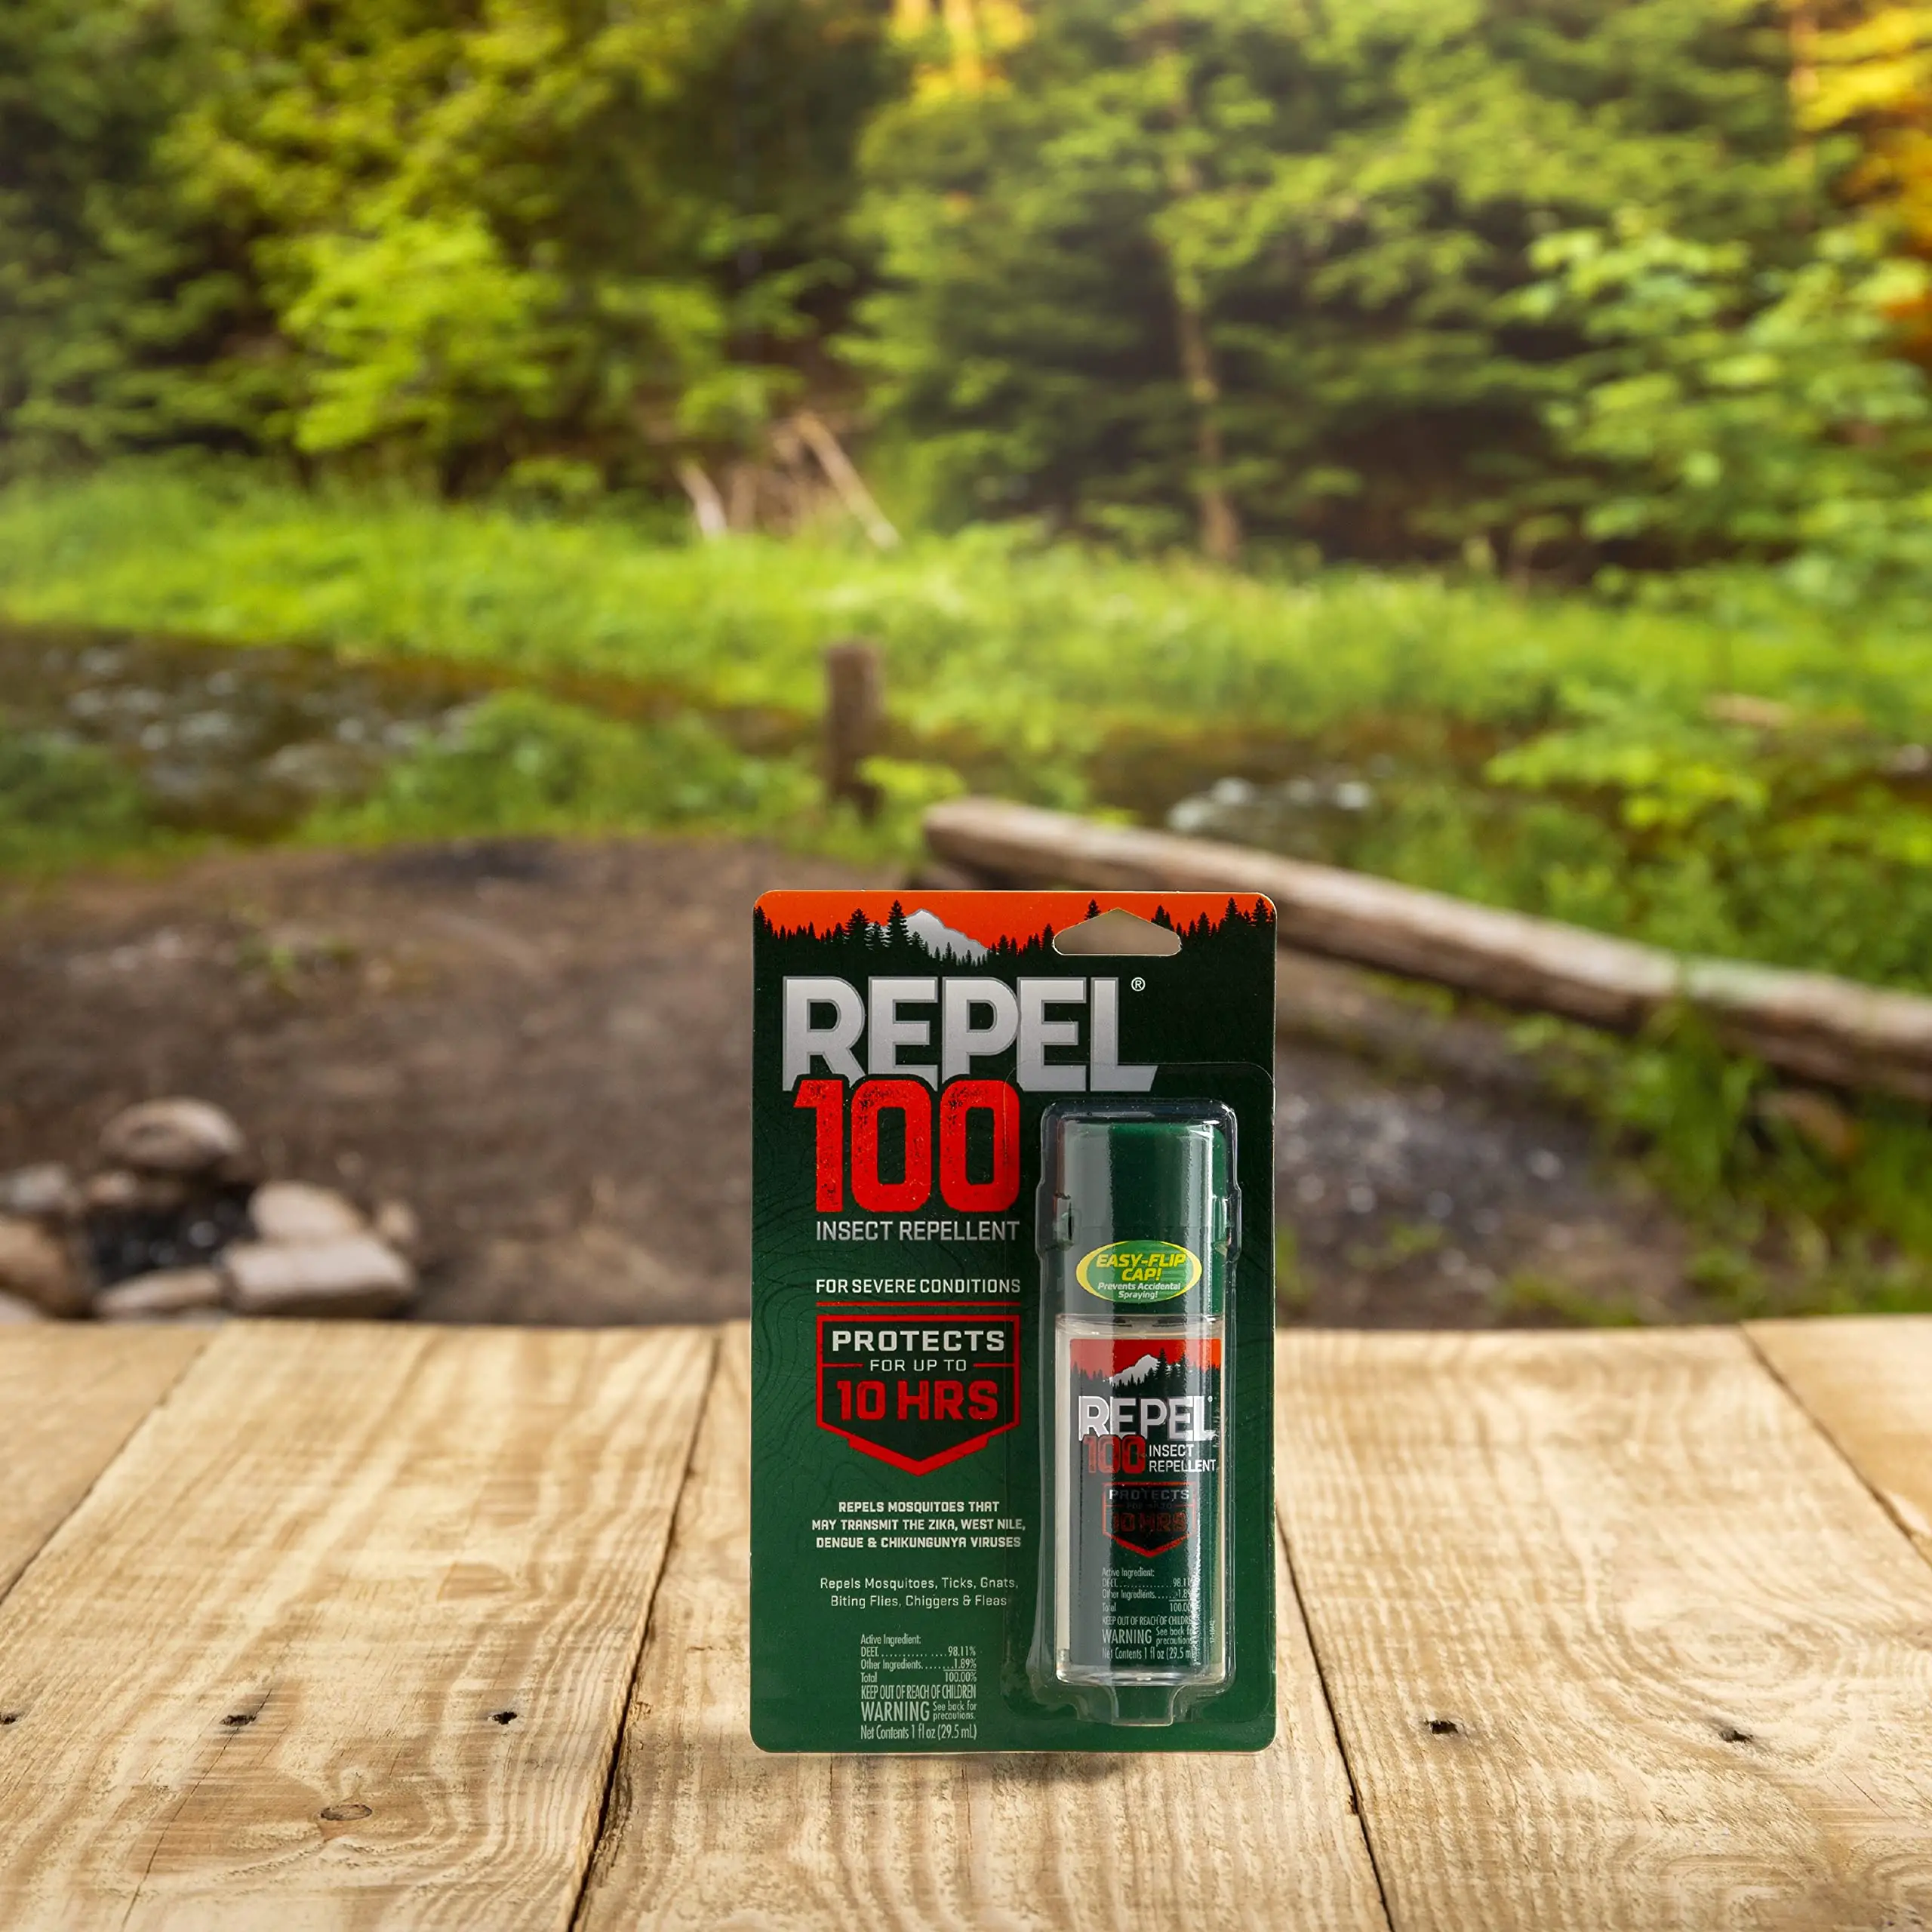 Repel 100 bug dope sitting on wood deck